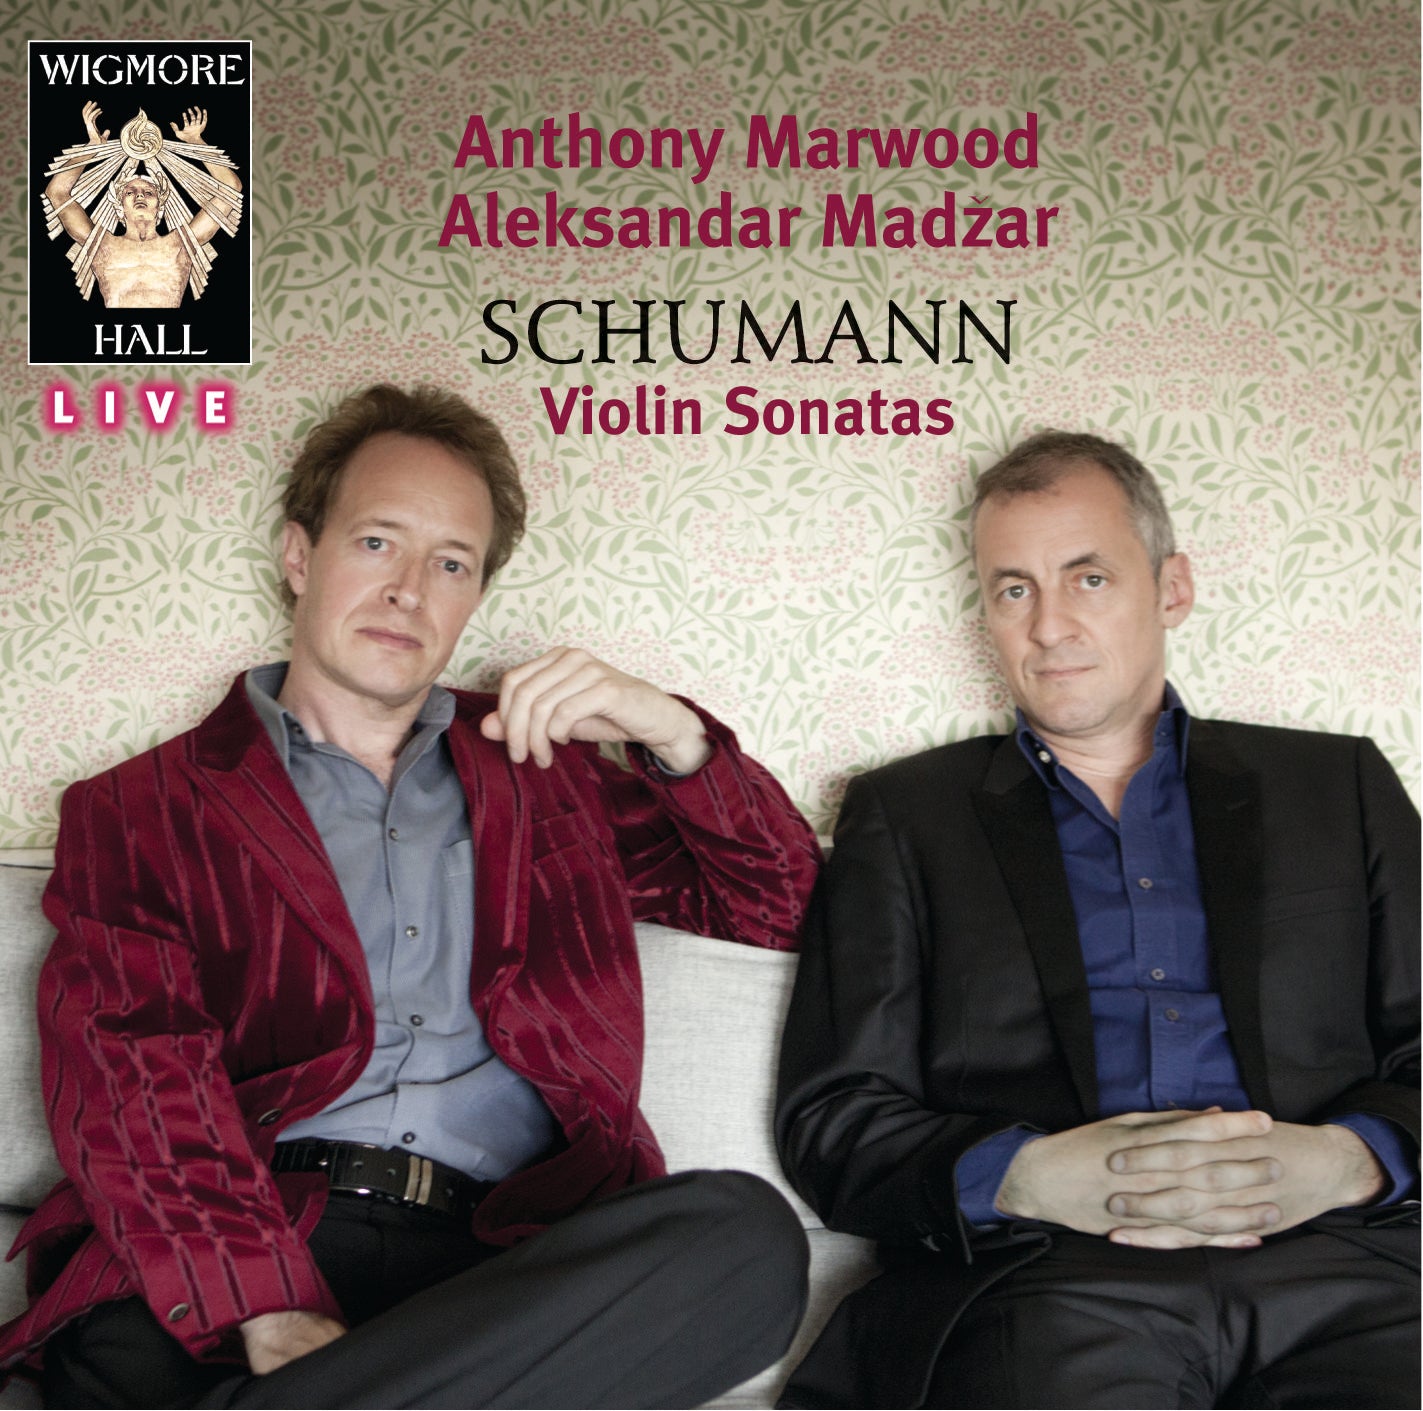 SCHUMANN: Violin Sonatas - Anthony Marwood, Aleksandar Madzar